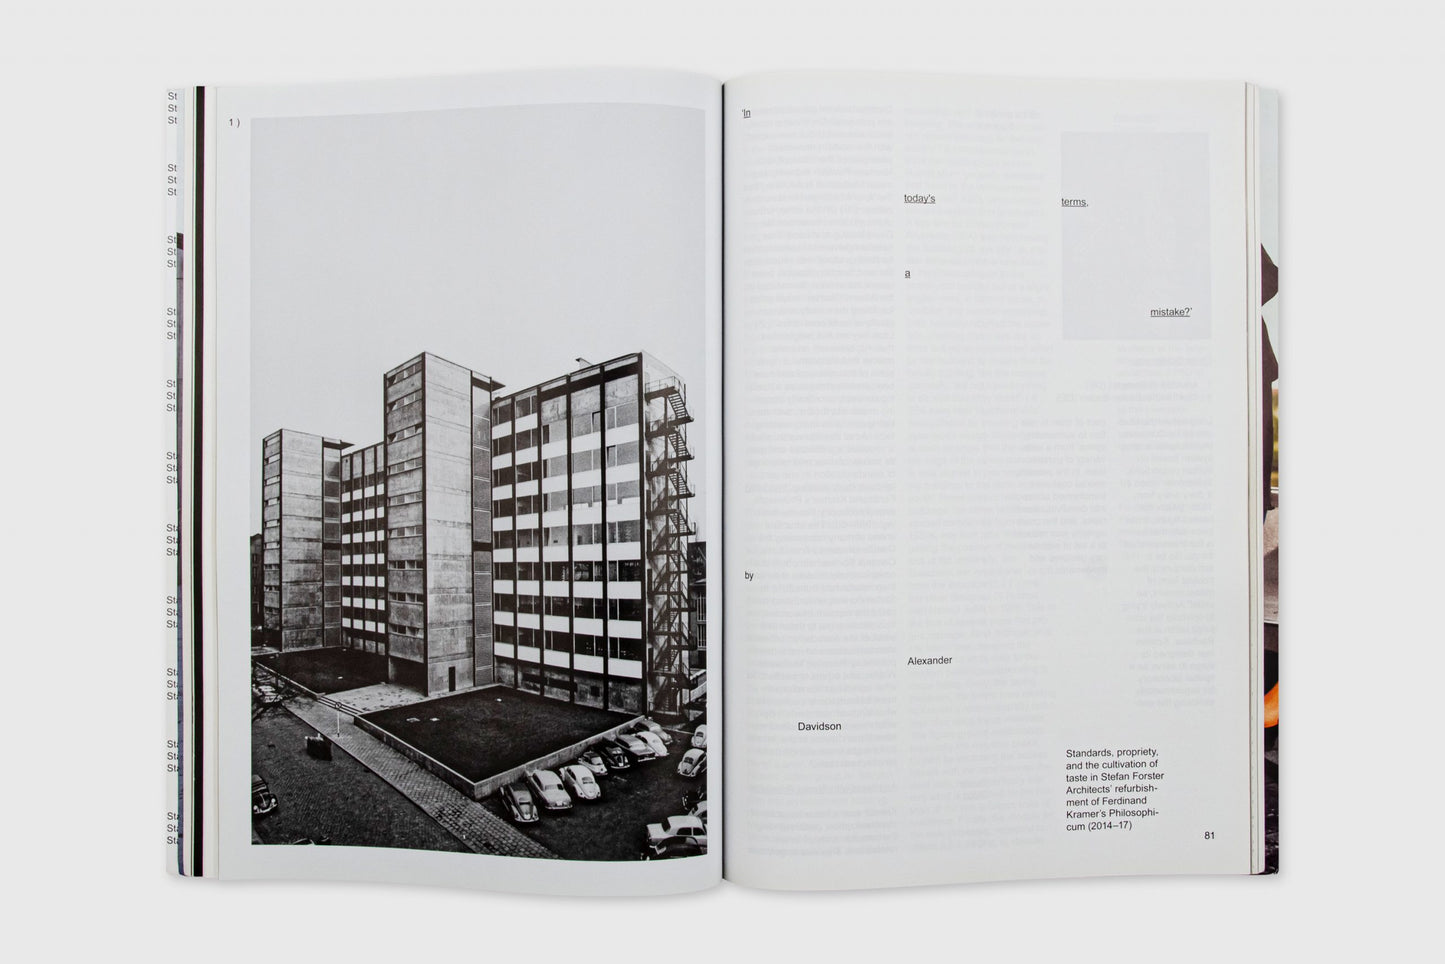 Bauhaus #10: The Bauhaus Dessau Foundation's Magazine